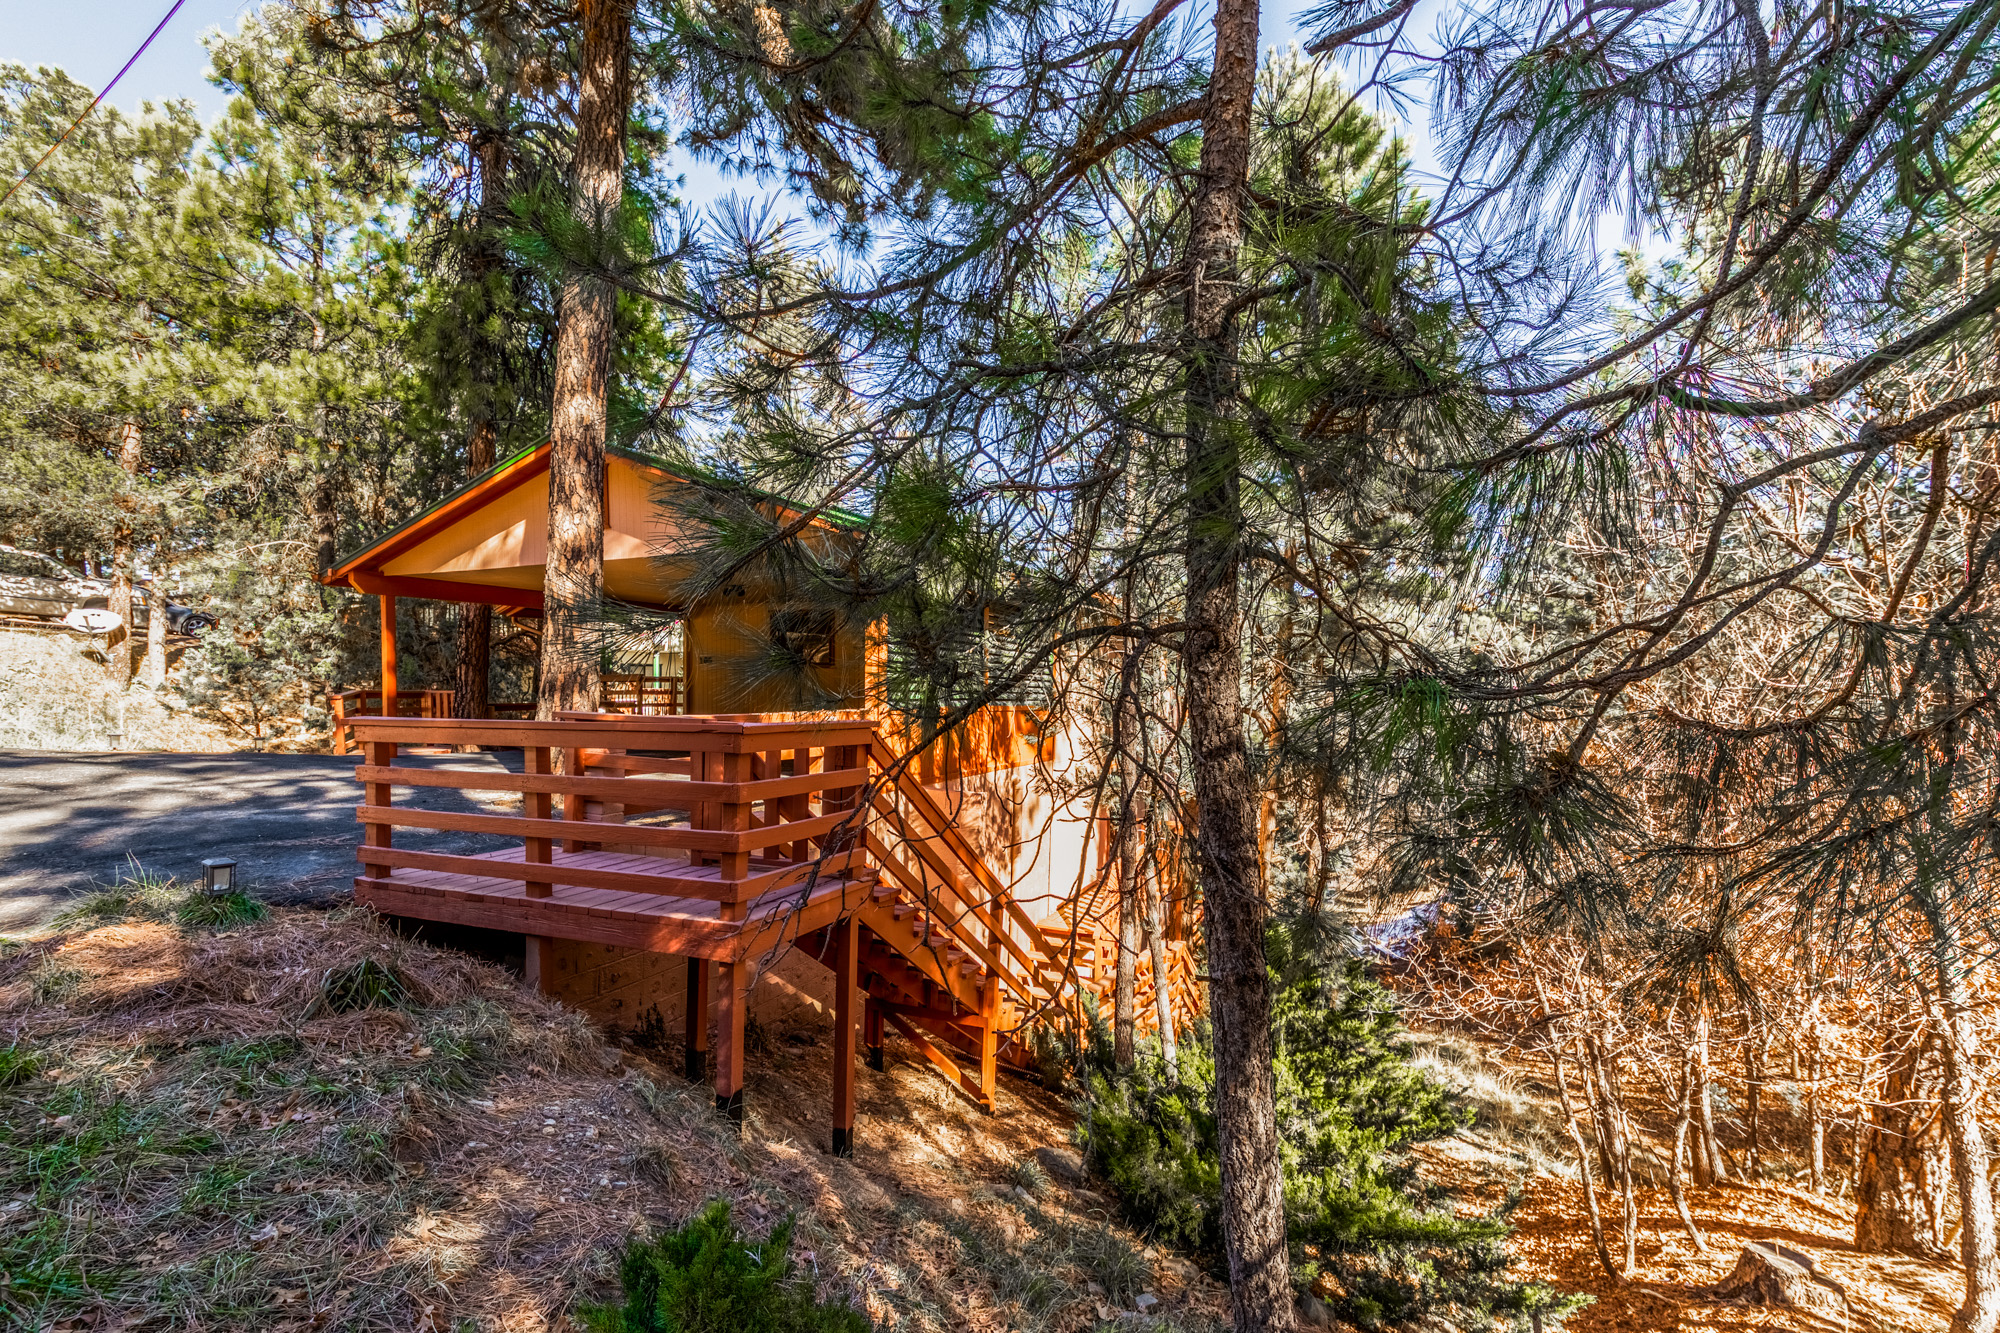 Pine View Lodge